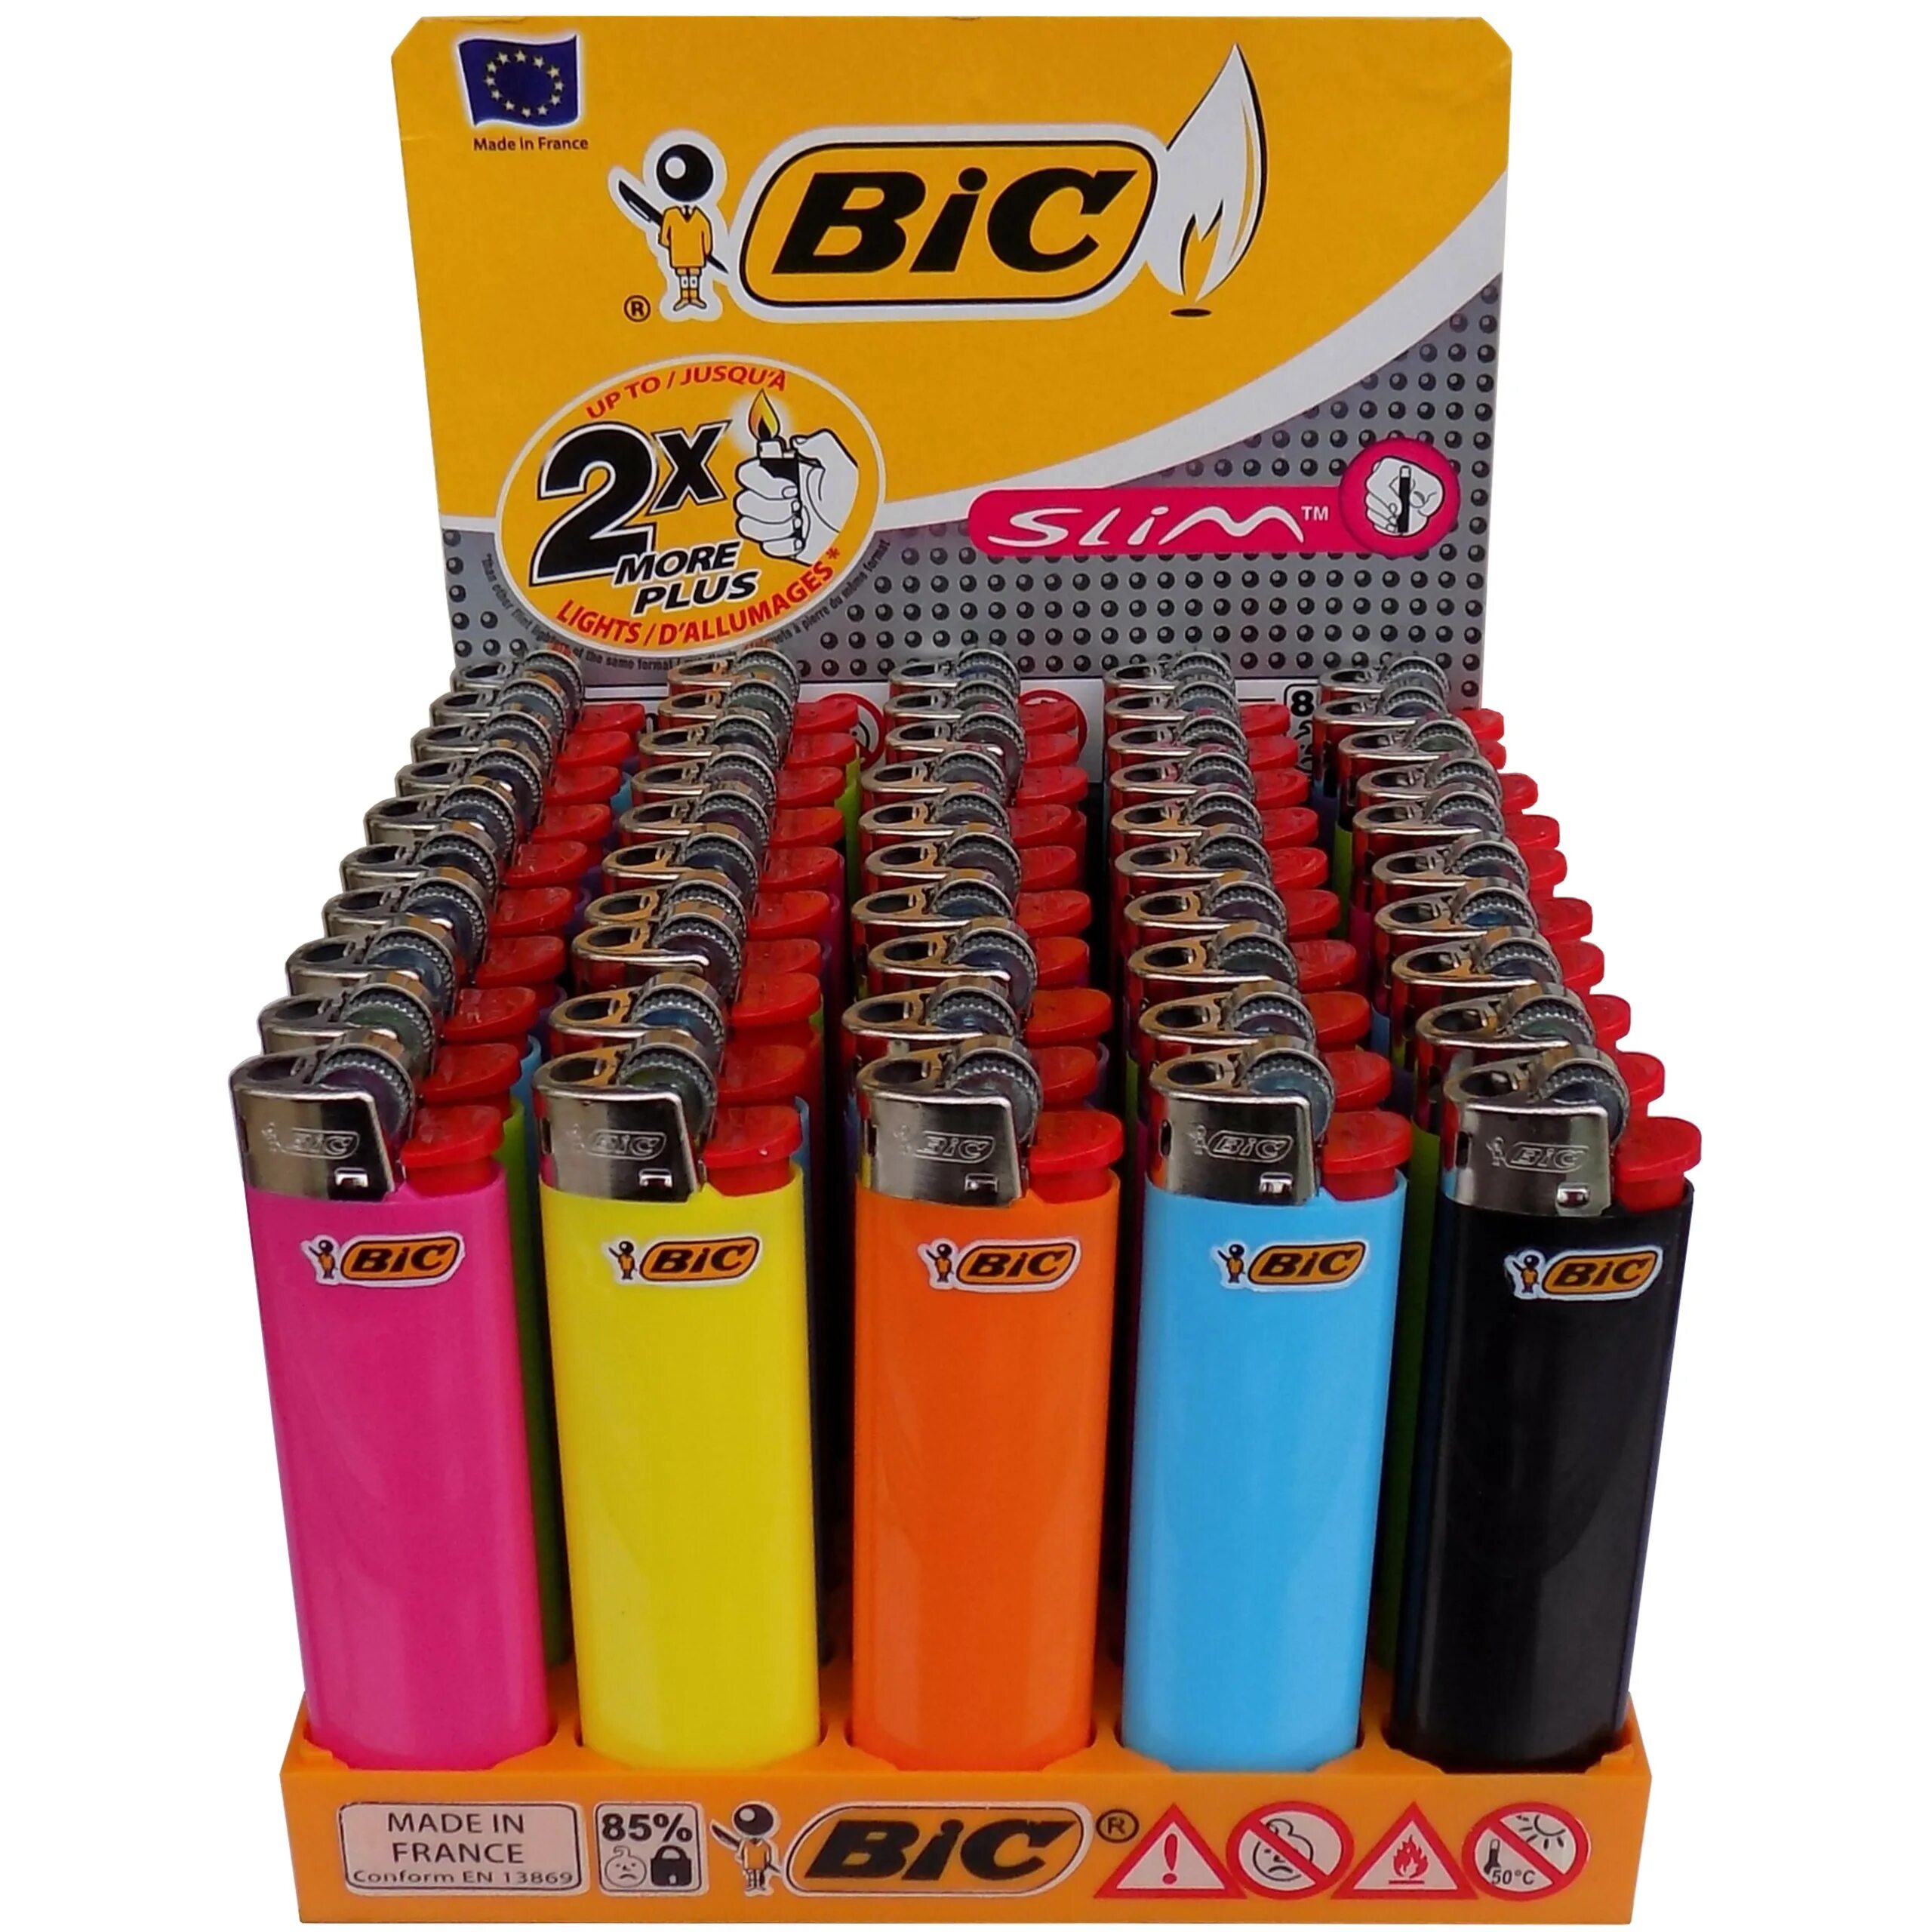 Зажигалка BIC j3 цветная. Зажигалки BIC j3 Slim. Зажигалки BIC Slim j3 Miami. Зажигалки "BIC" 1/50. Зажигалка бик